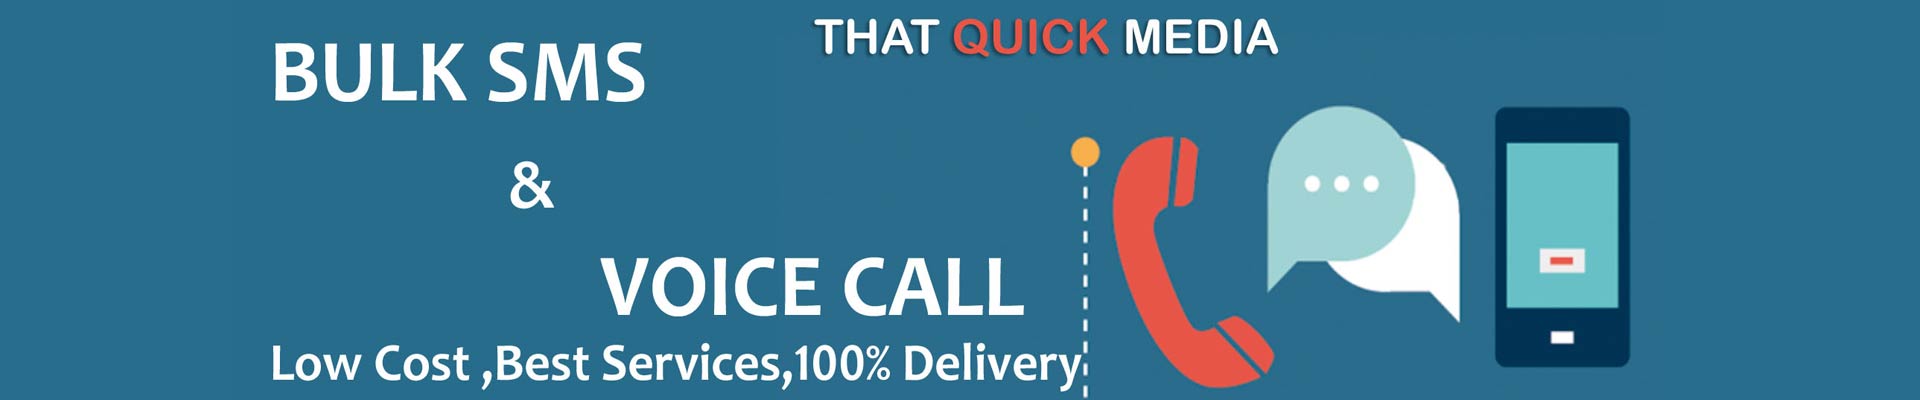 Bulk SMS & Voice Call Marketing